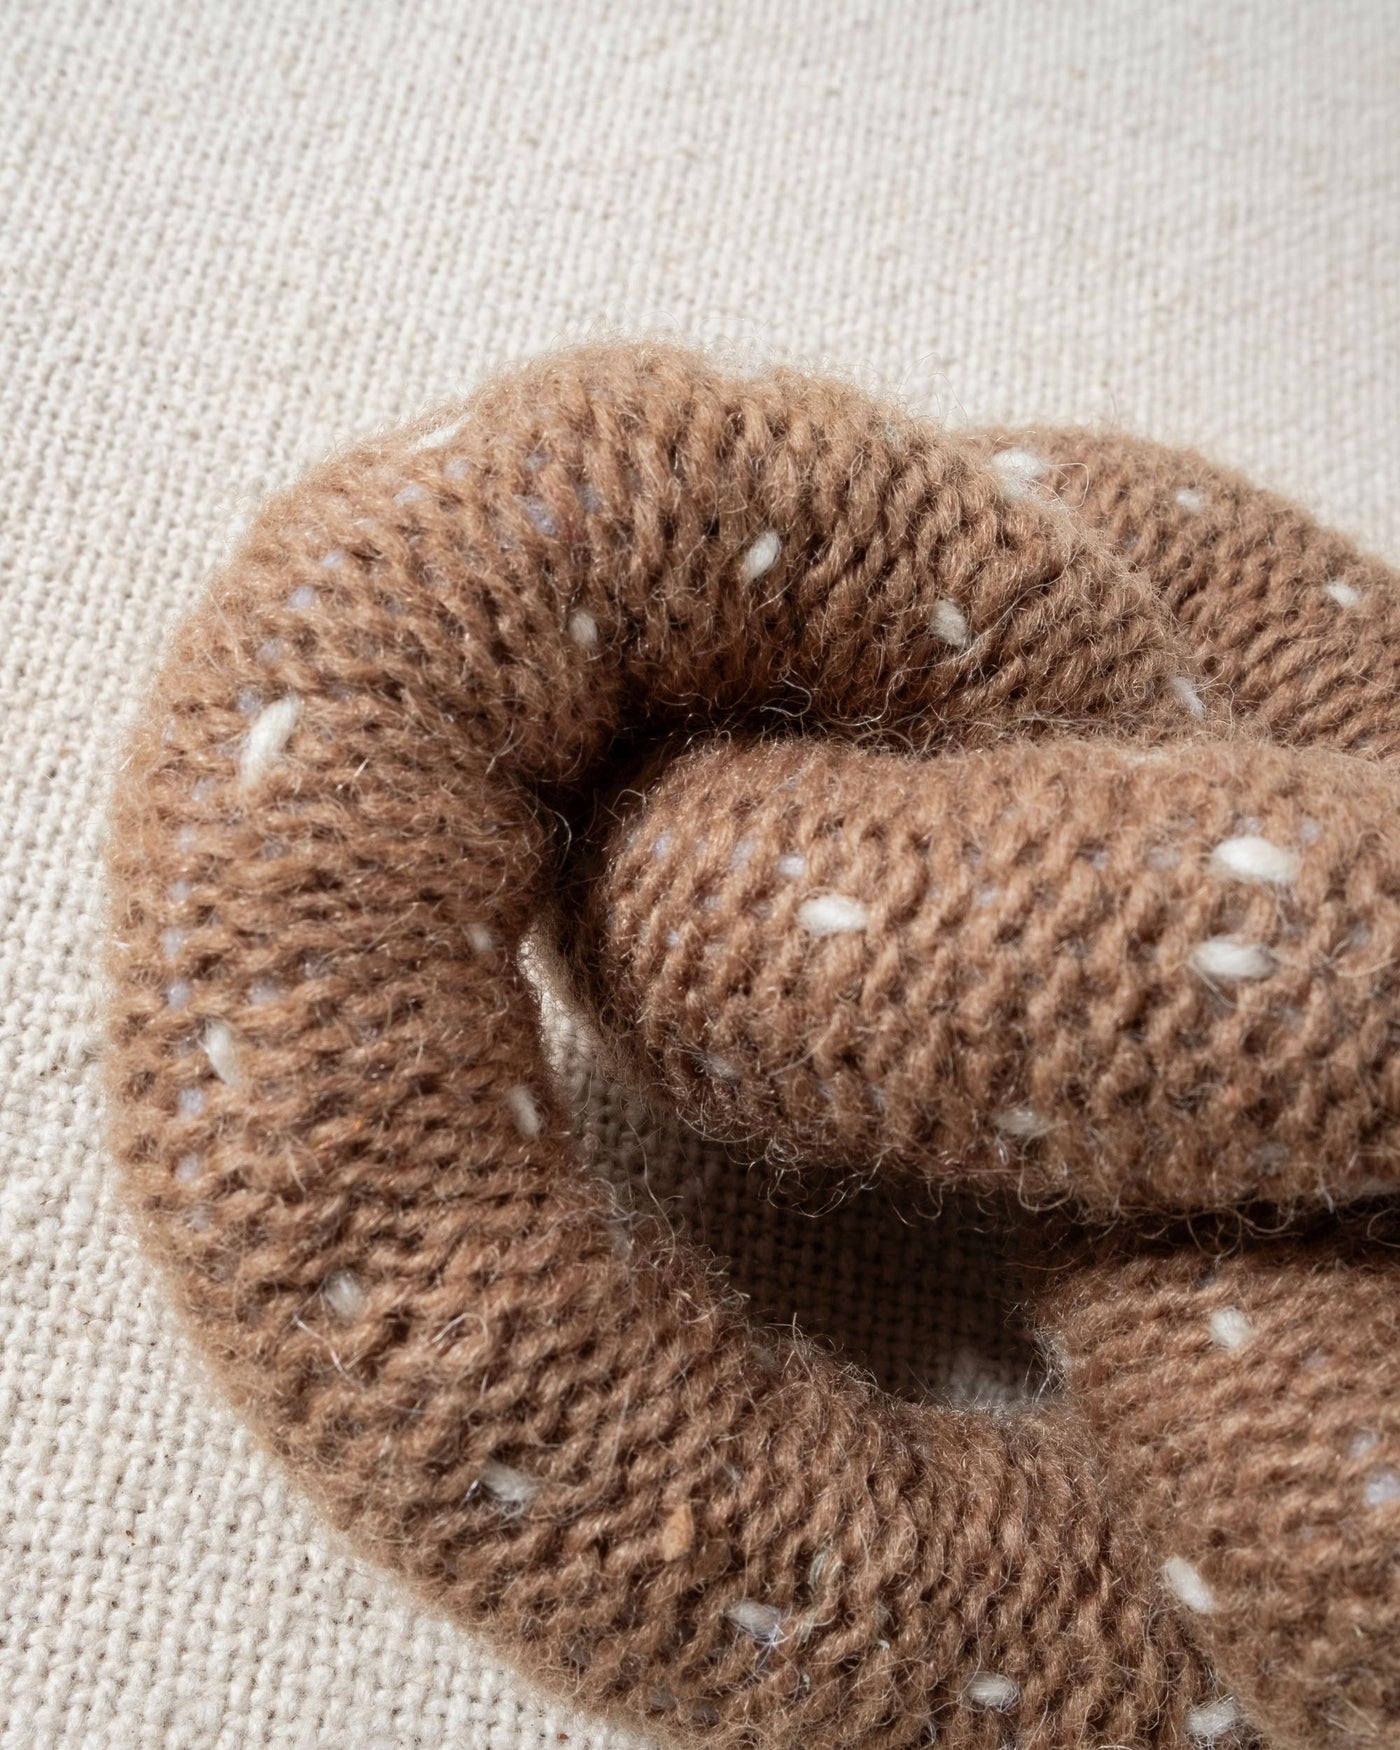 tan and white hand knit crochet pretzel dog toy